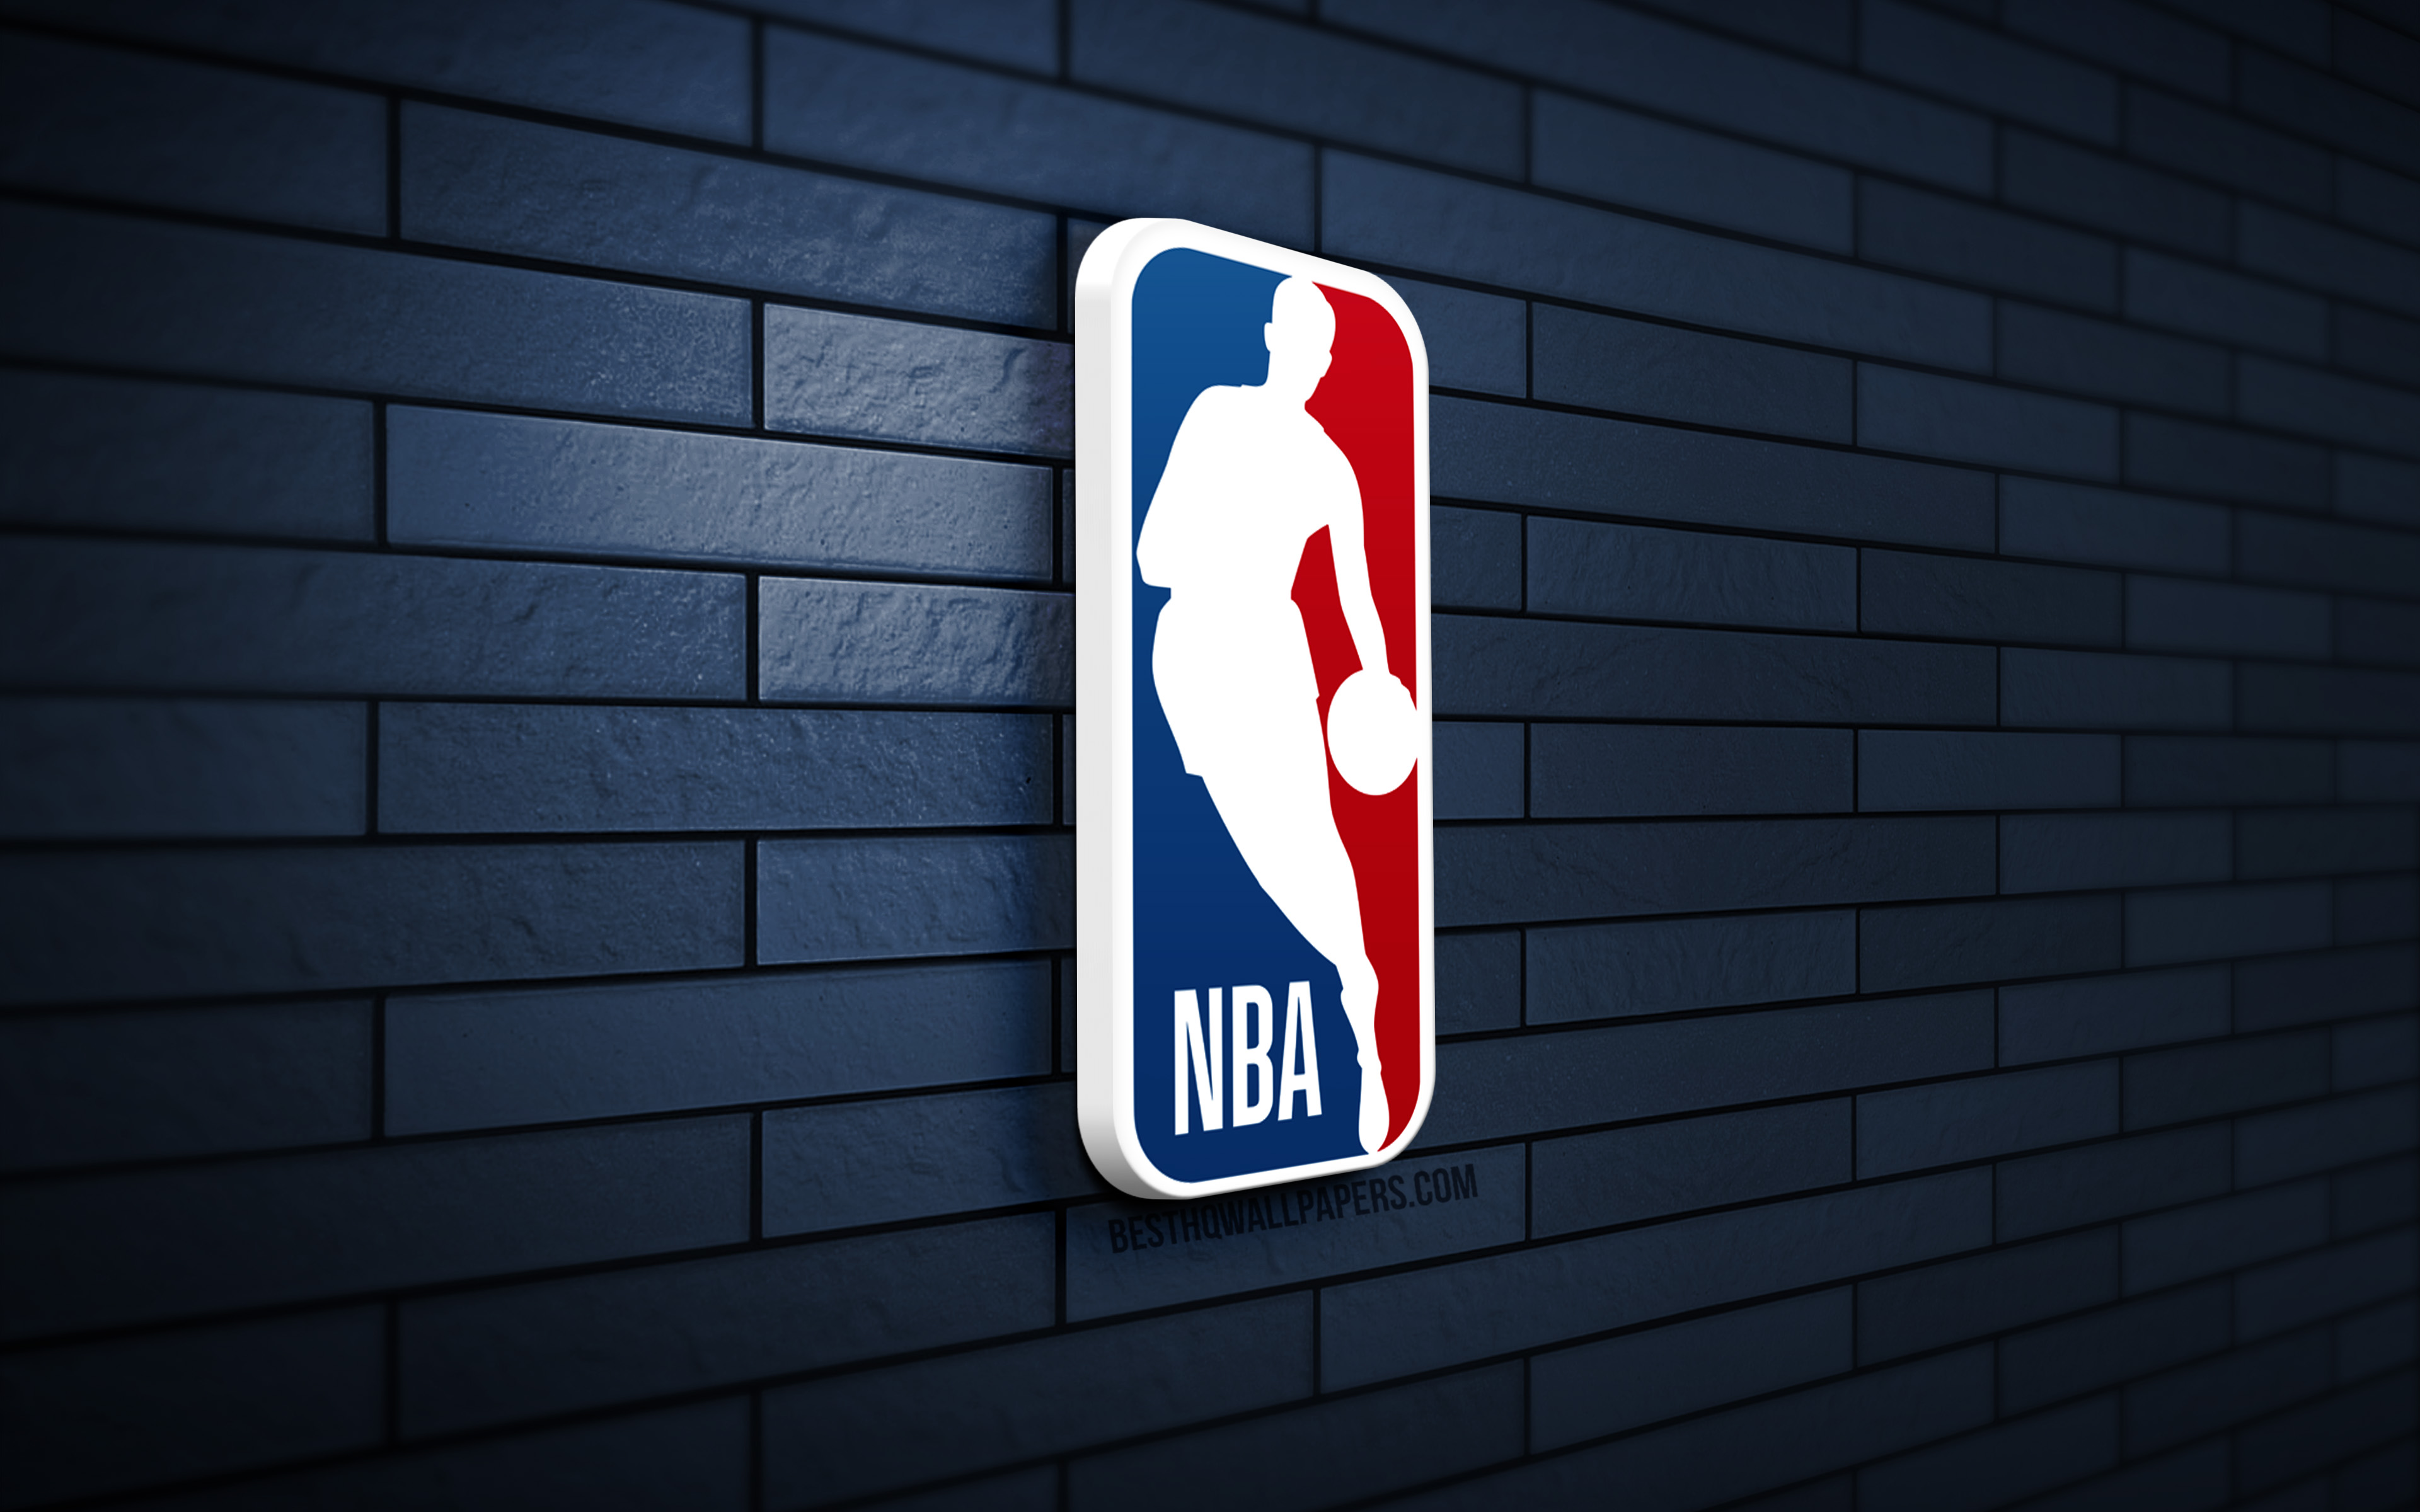 Download wallpaper NBA 3D logo, 4K, gray brickwall, National Basketball Association, creative, basketball leagues, NBA logo, 3D art, NBA for desktop with resolution 3840x2400. High Quality HD picture wallpaper